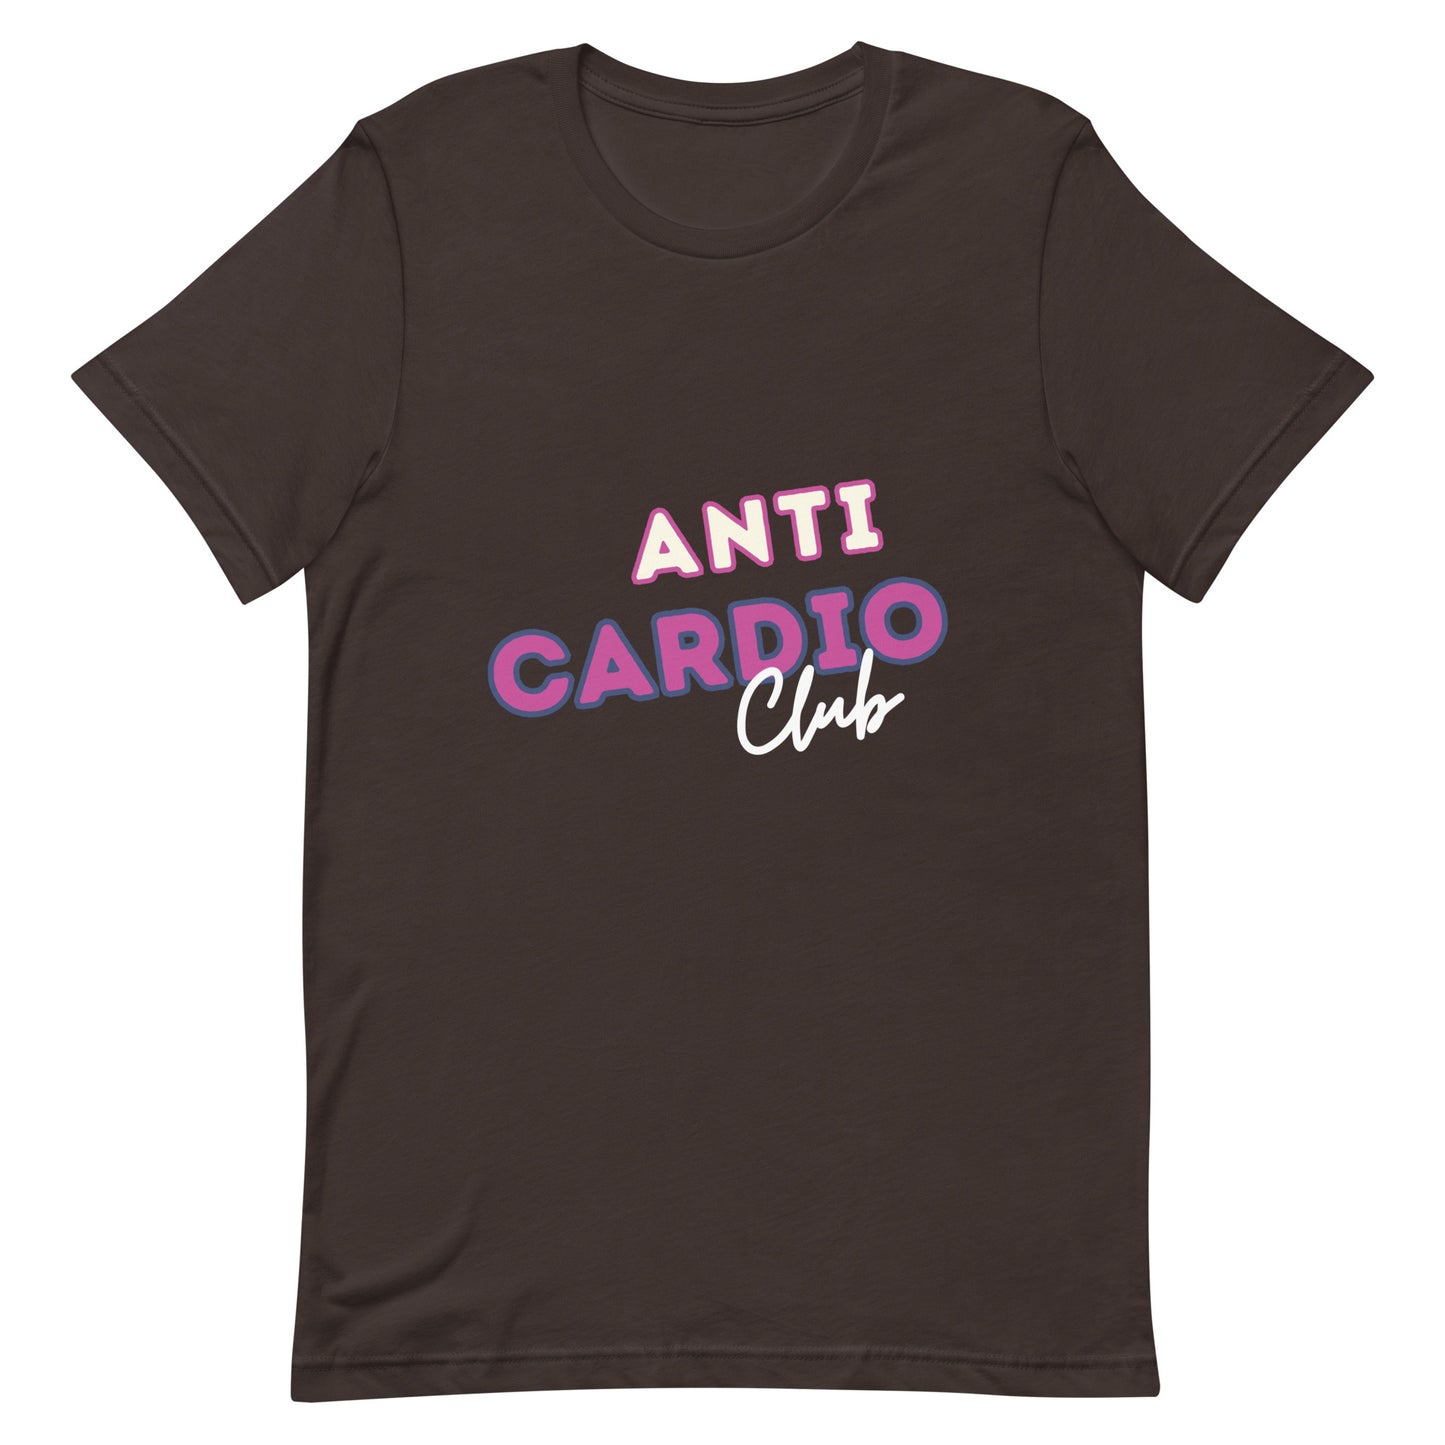 ANTI CARDIO CLUB Workout Tshirt for Women